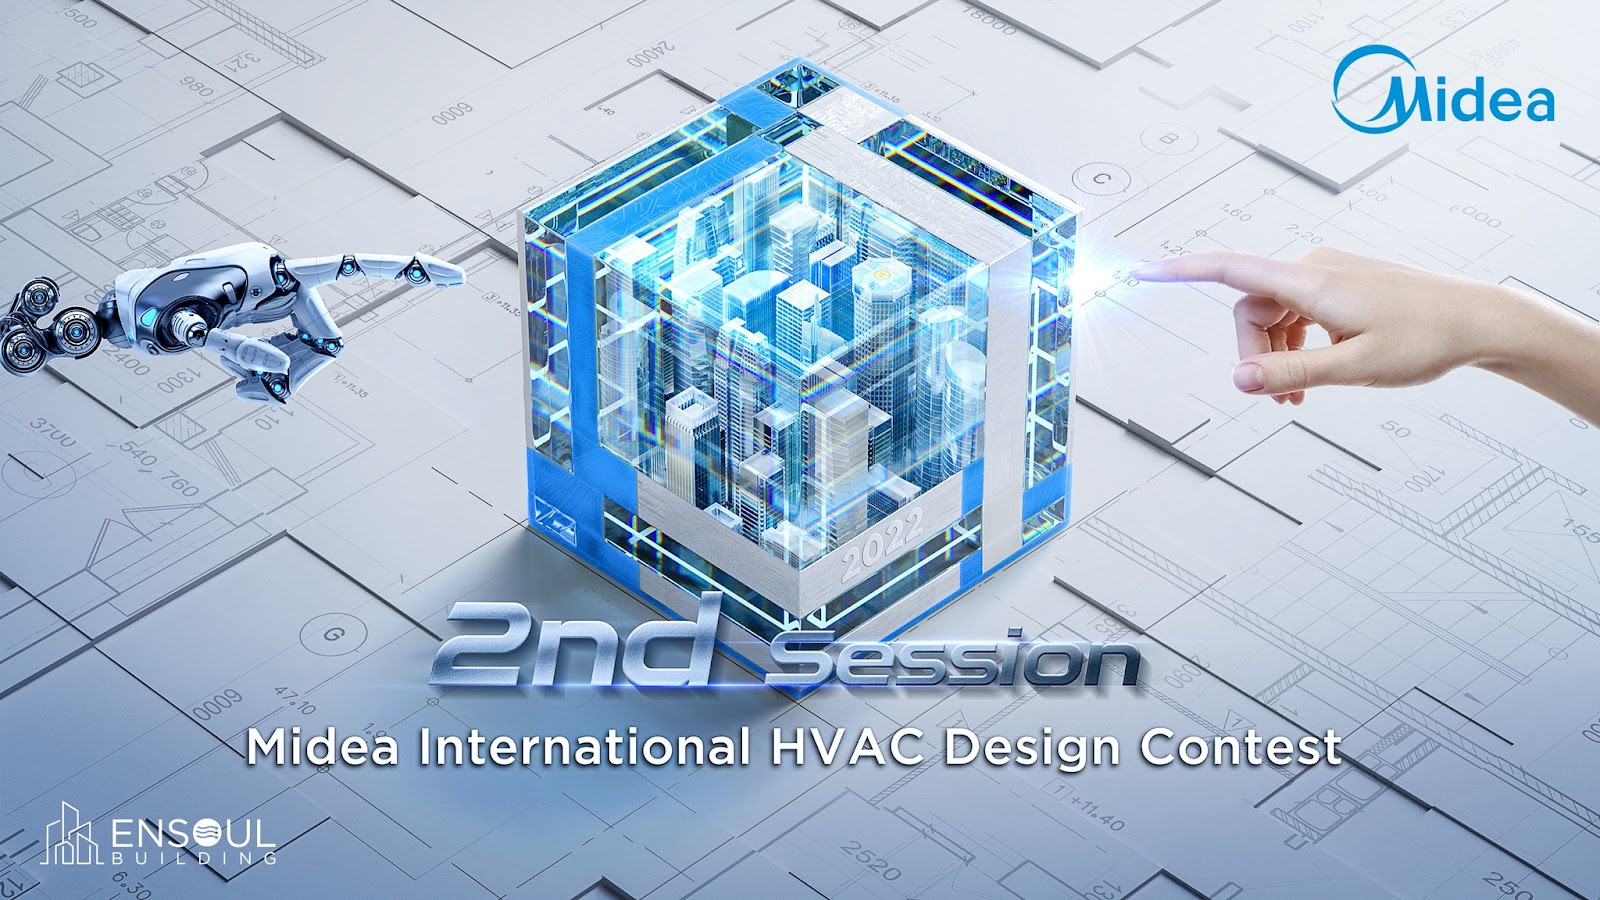 2nd Session Midea International HVAC Design Contest